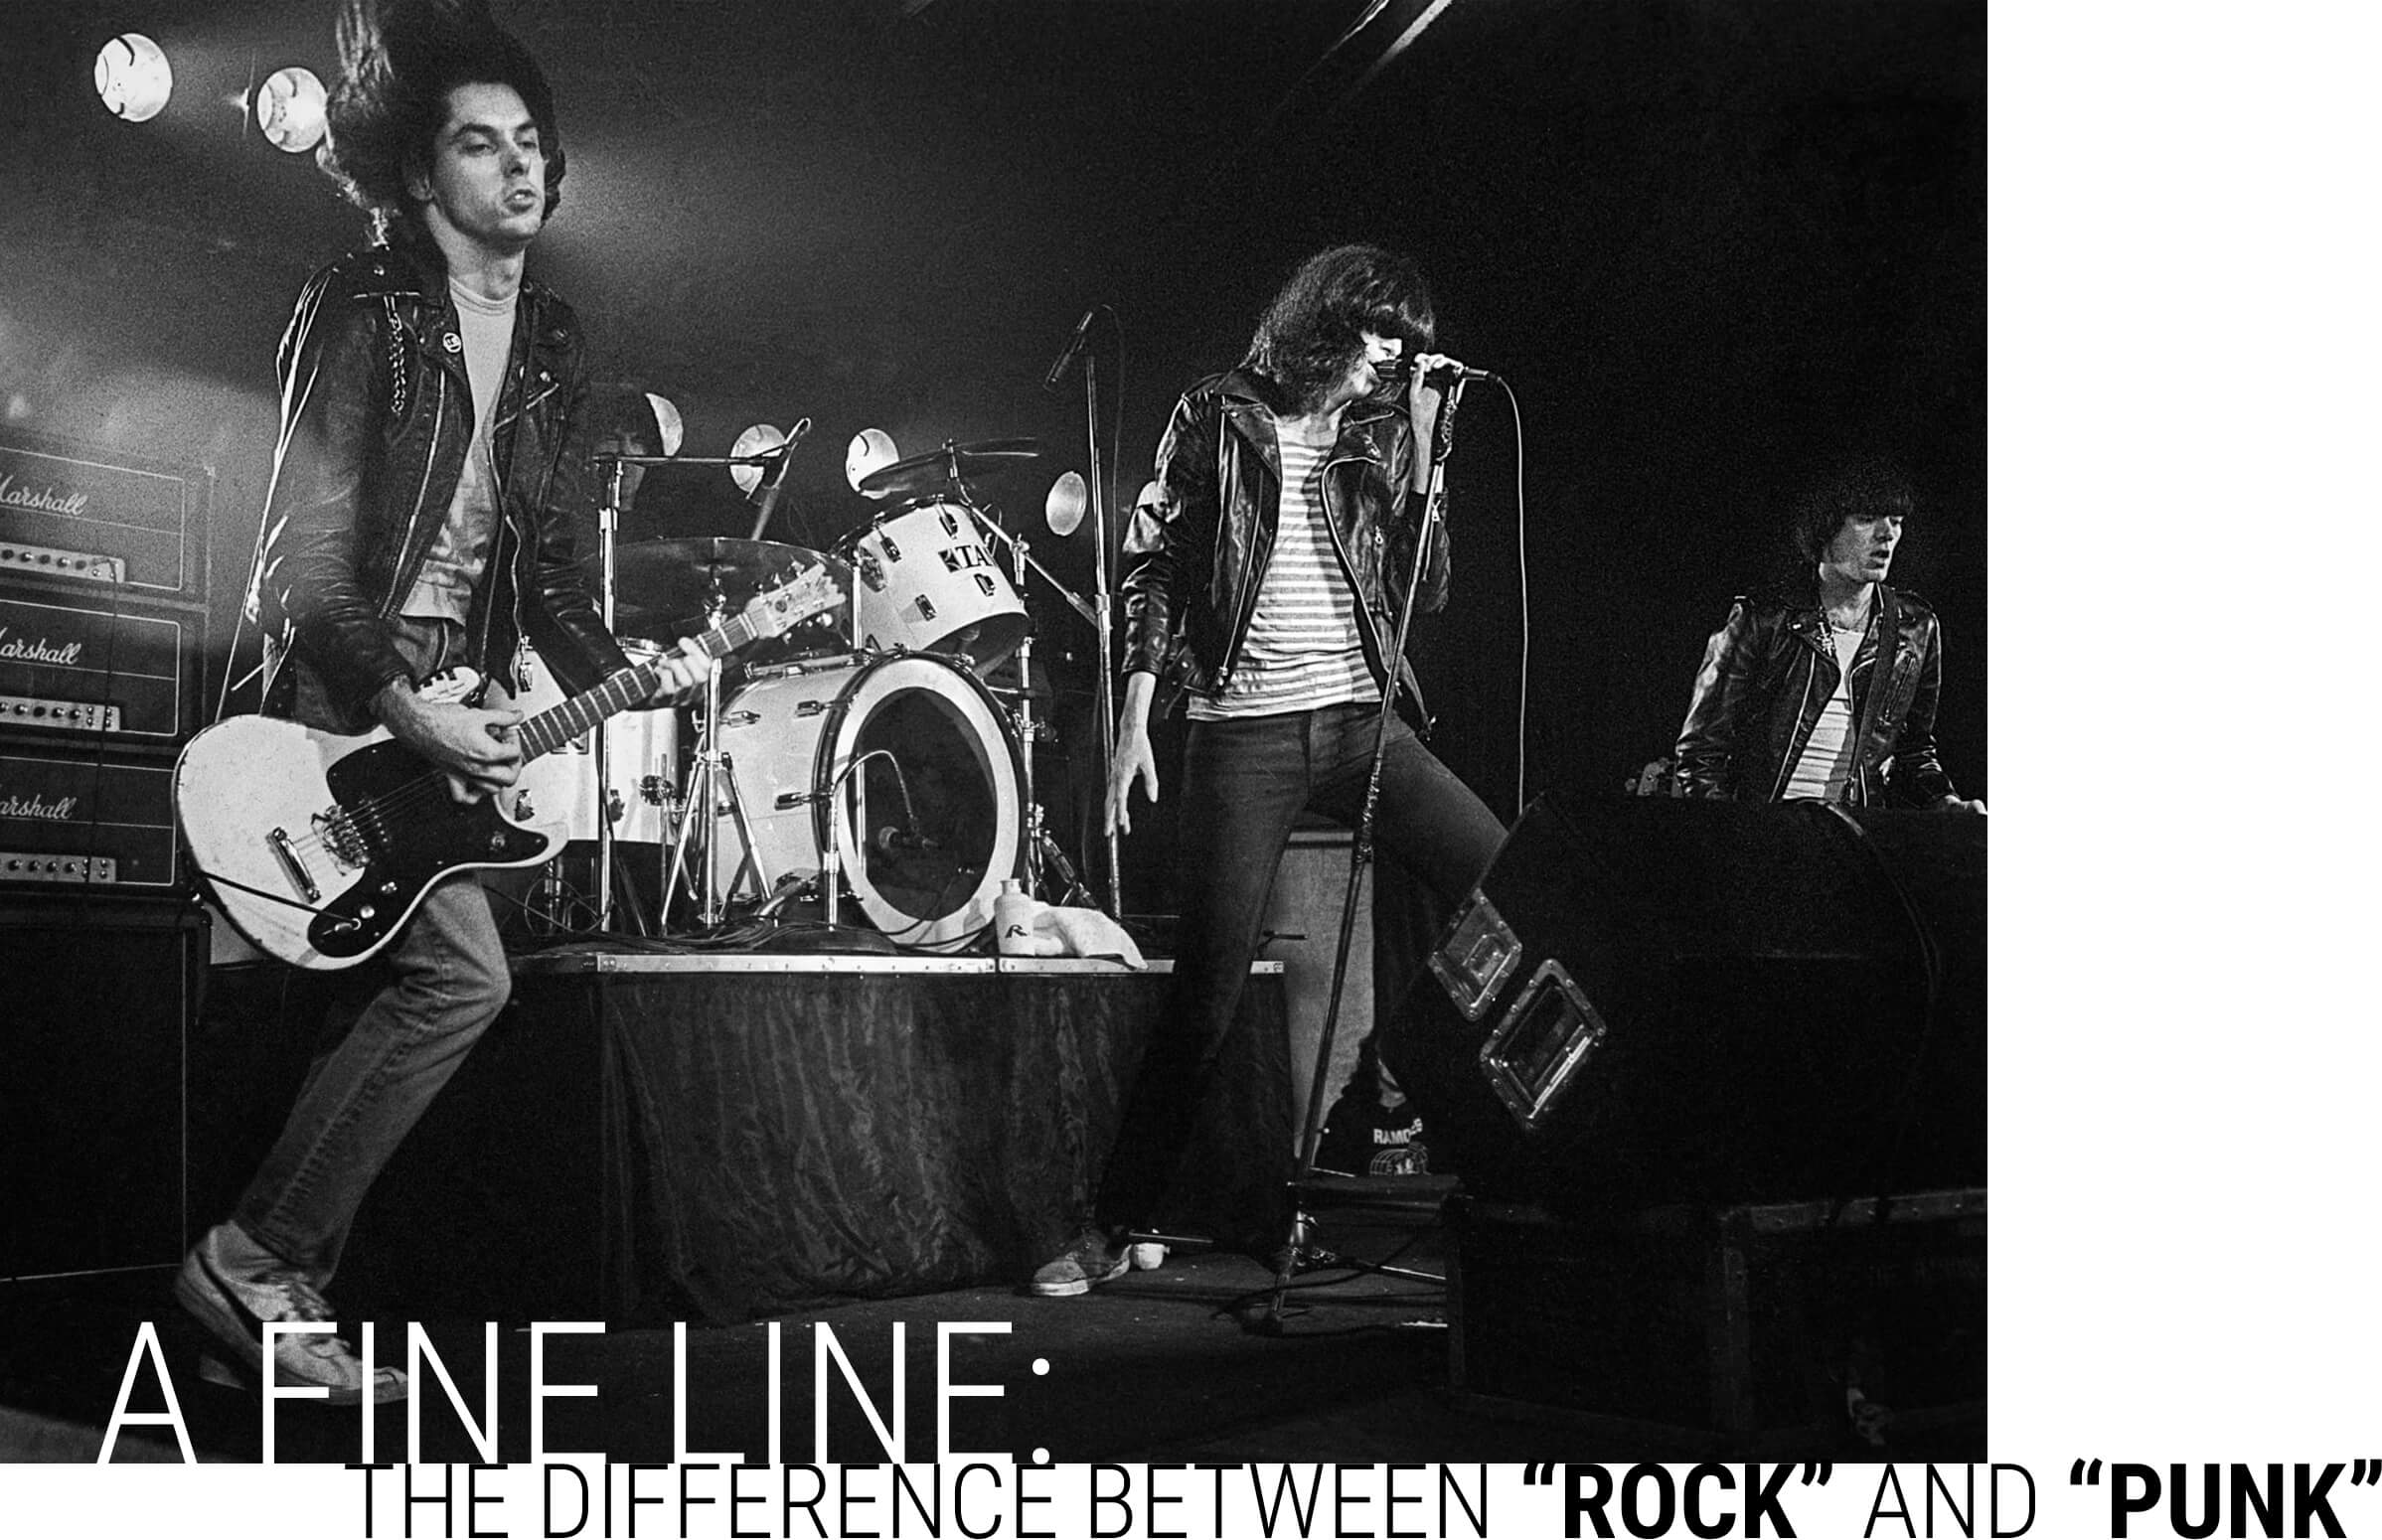 https://daysofpunk.com/wp-content/uploads/2021/02/the-first-punk-band-the-ramones-live.jpg